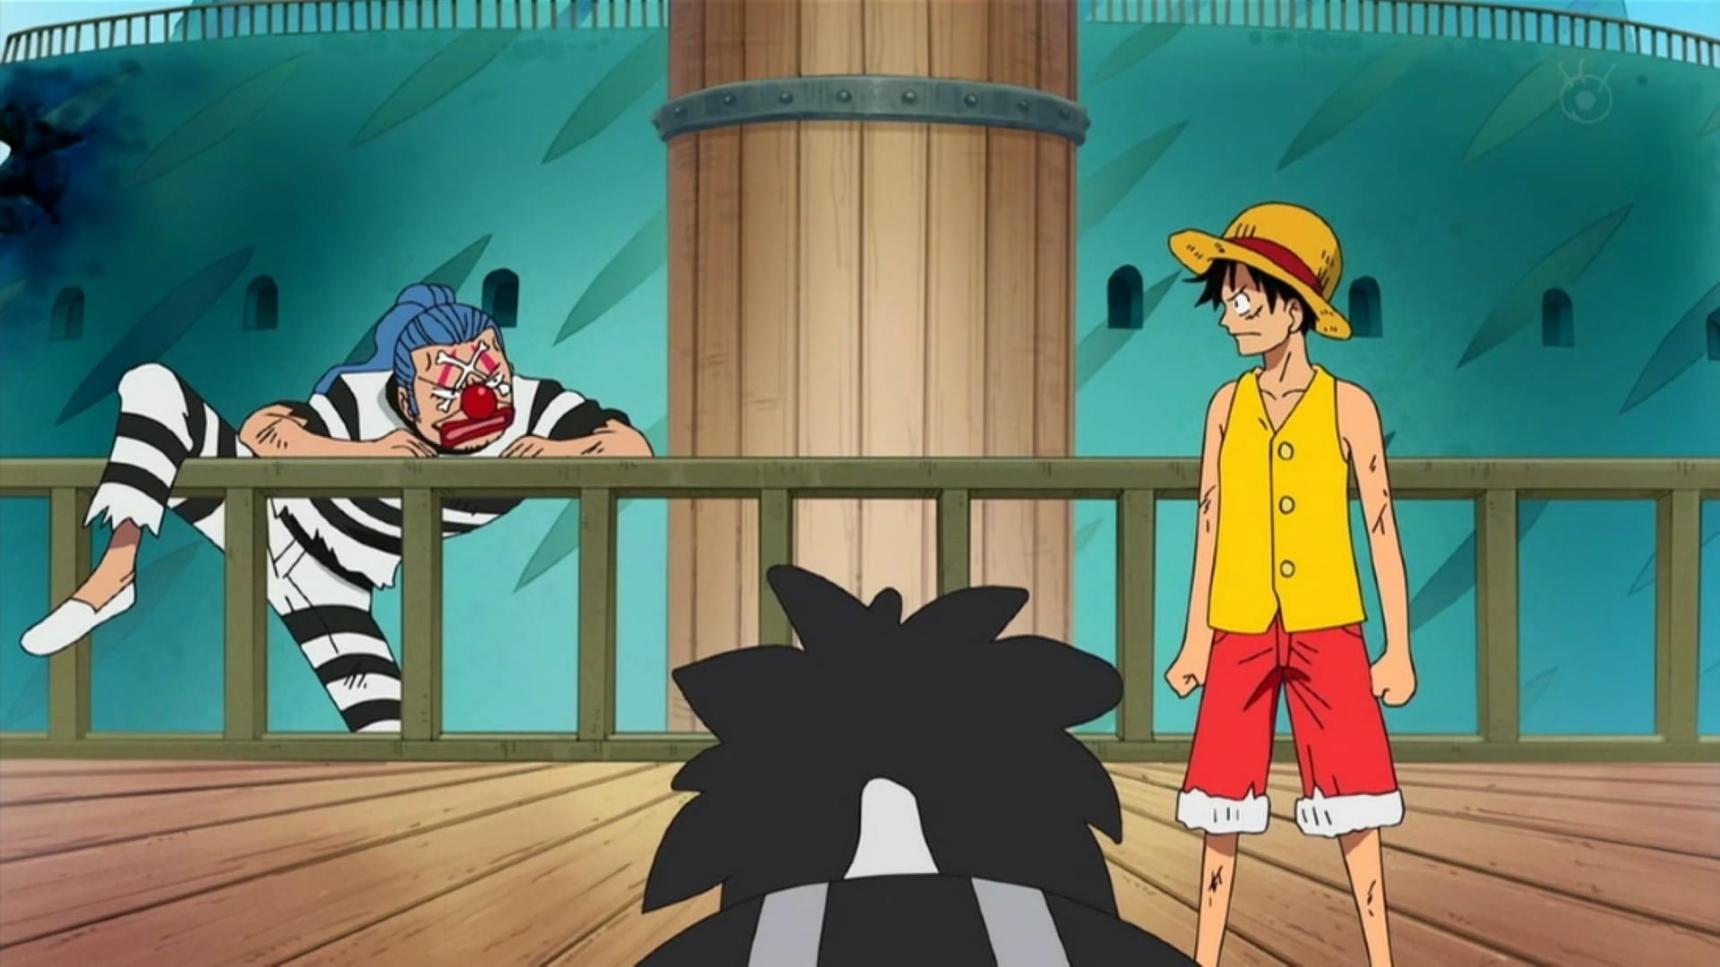 Poster del episodio 452 de One Piece online